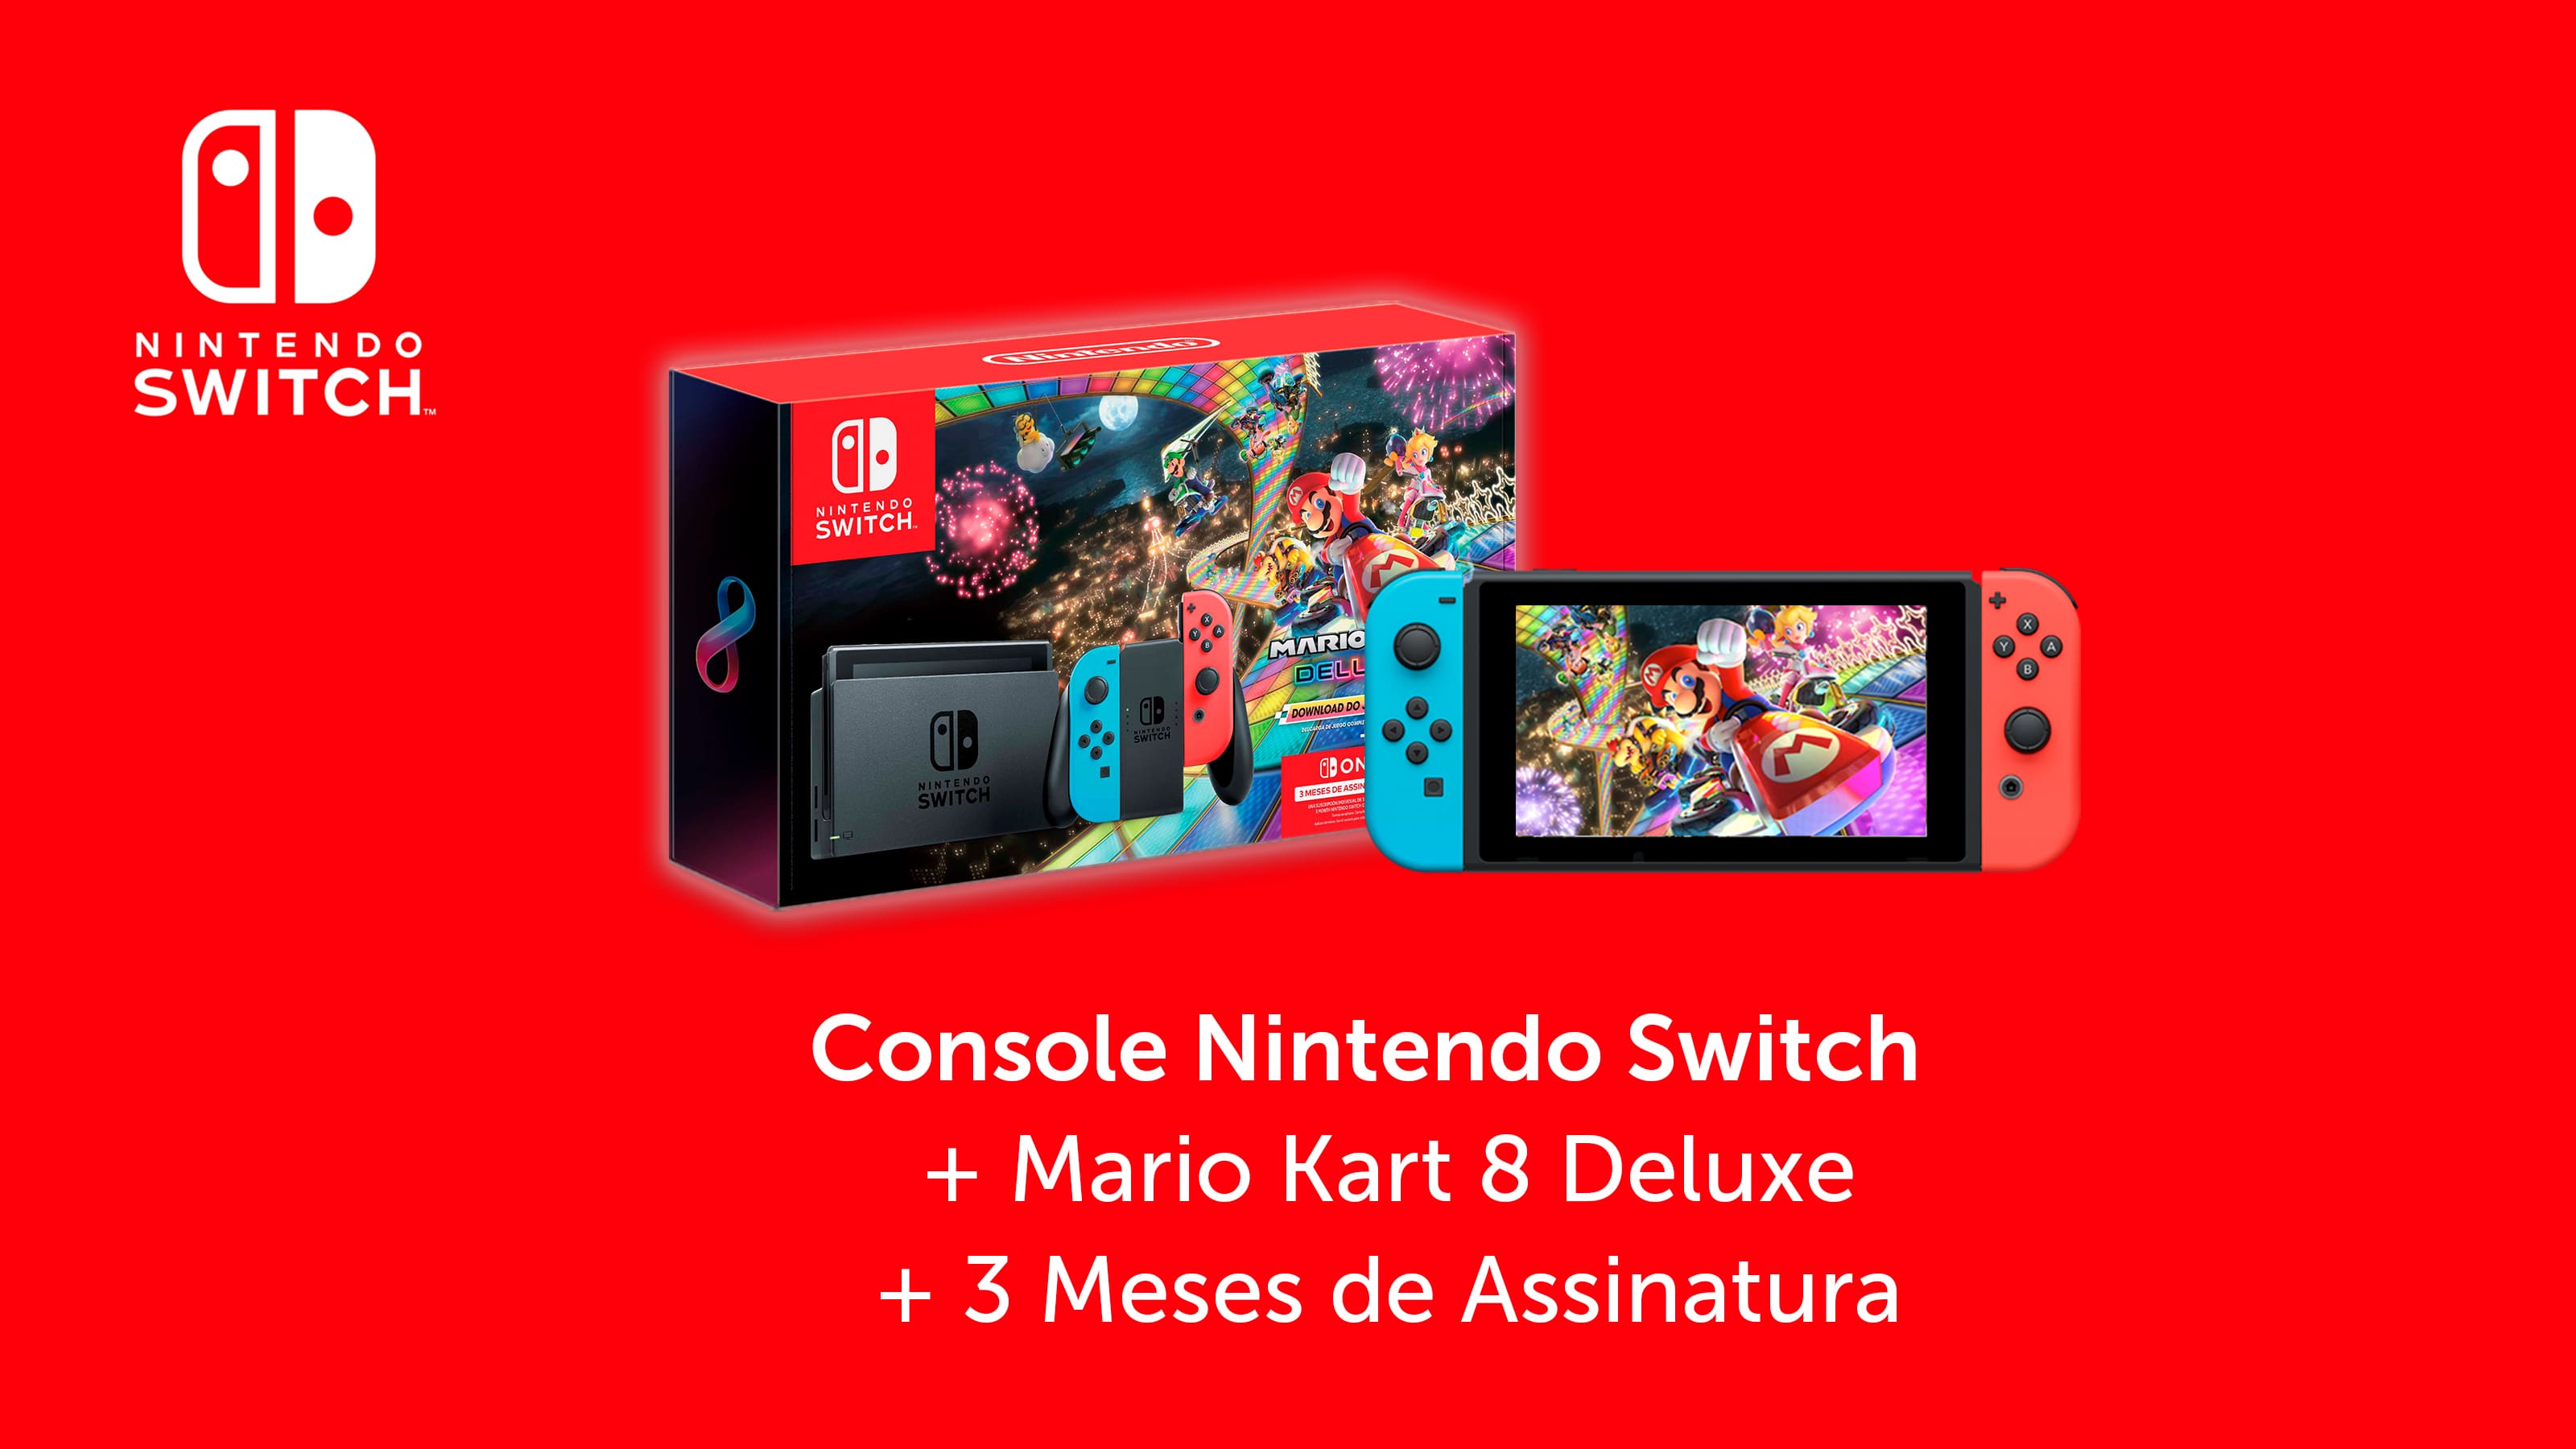 Console Nintendo Switch 32gb + Mario Kart 8 Deluxe - Neon